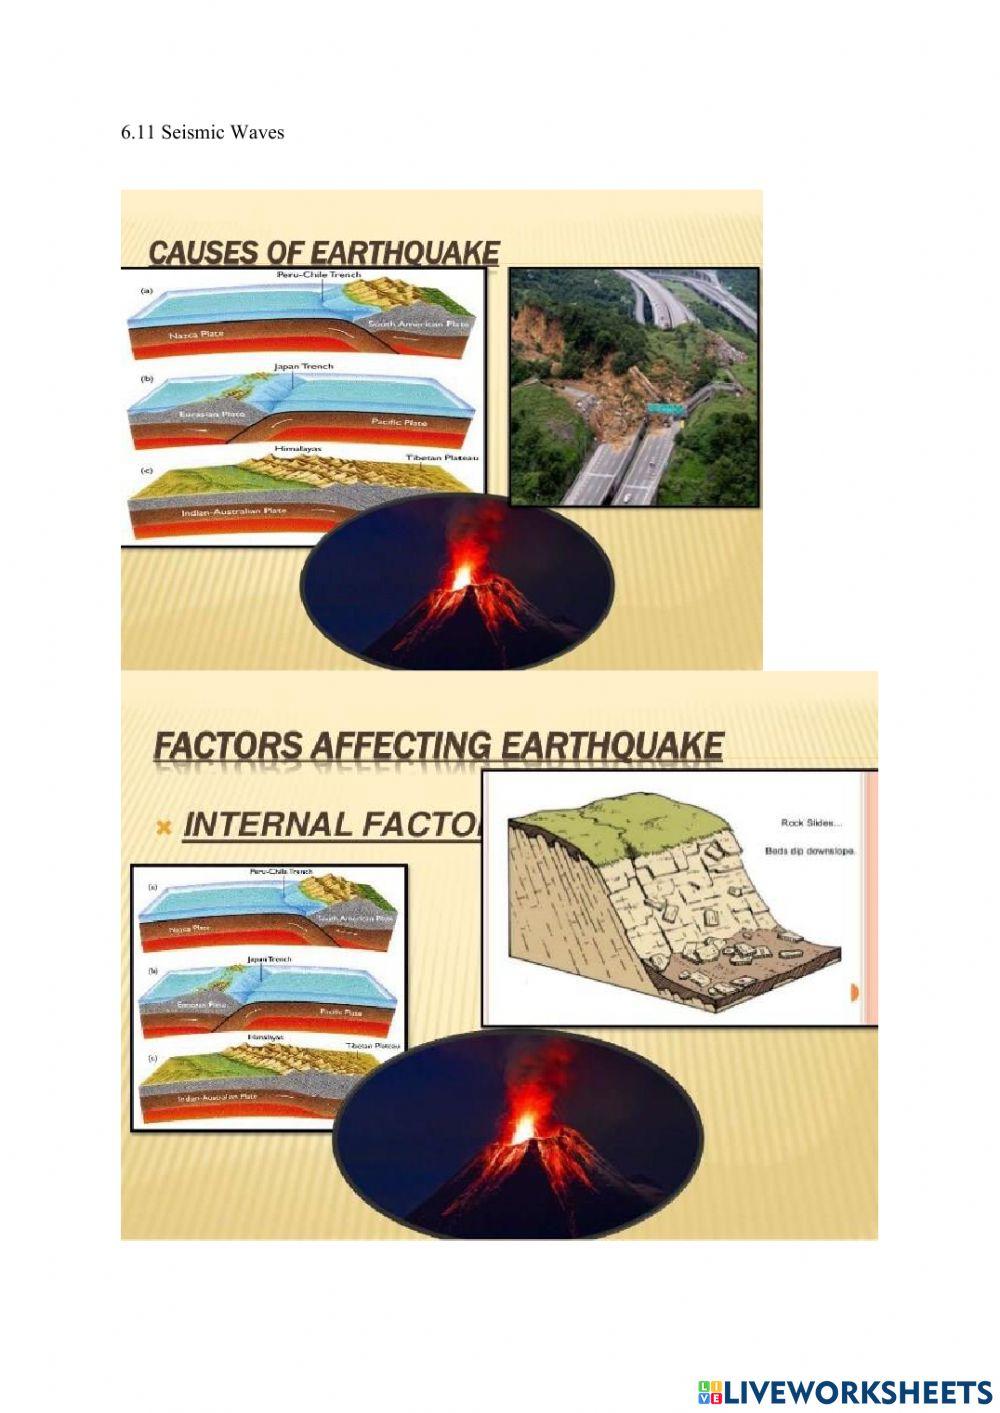 6.11 Seismic Waves